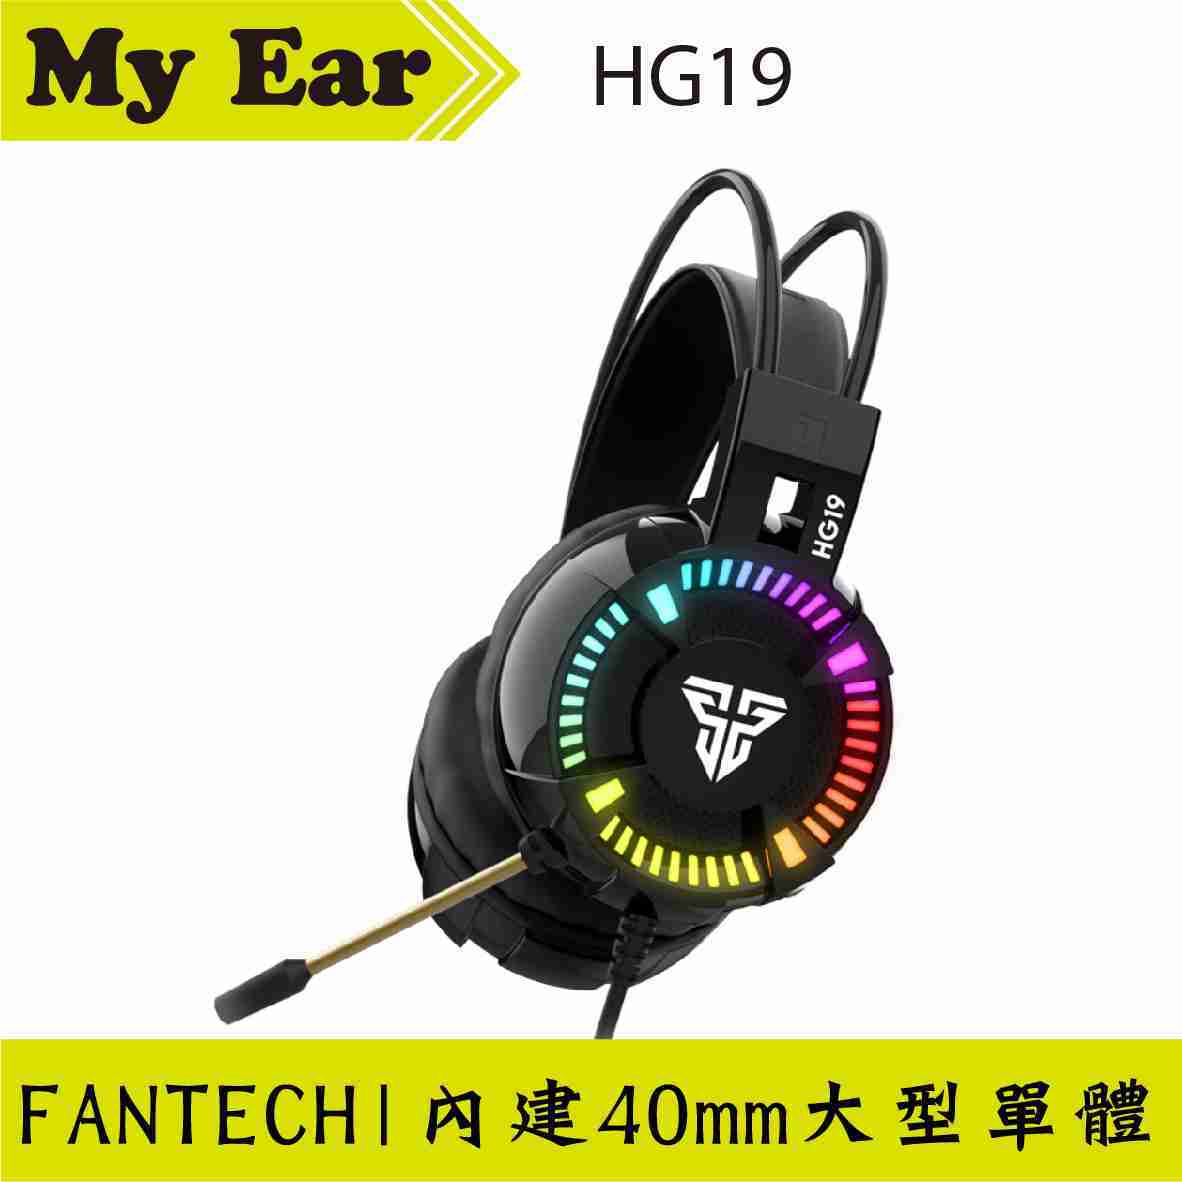 FANTECH HG19 耳罩式電競耳機 40mm驅動大單體 | My Ear耳機專門店